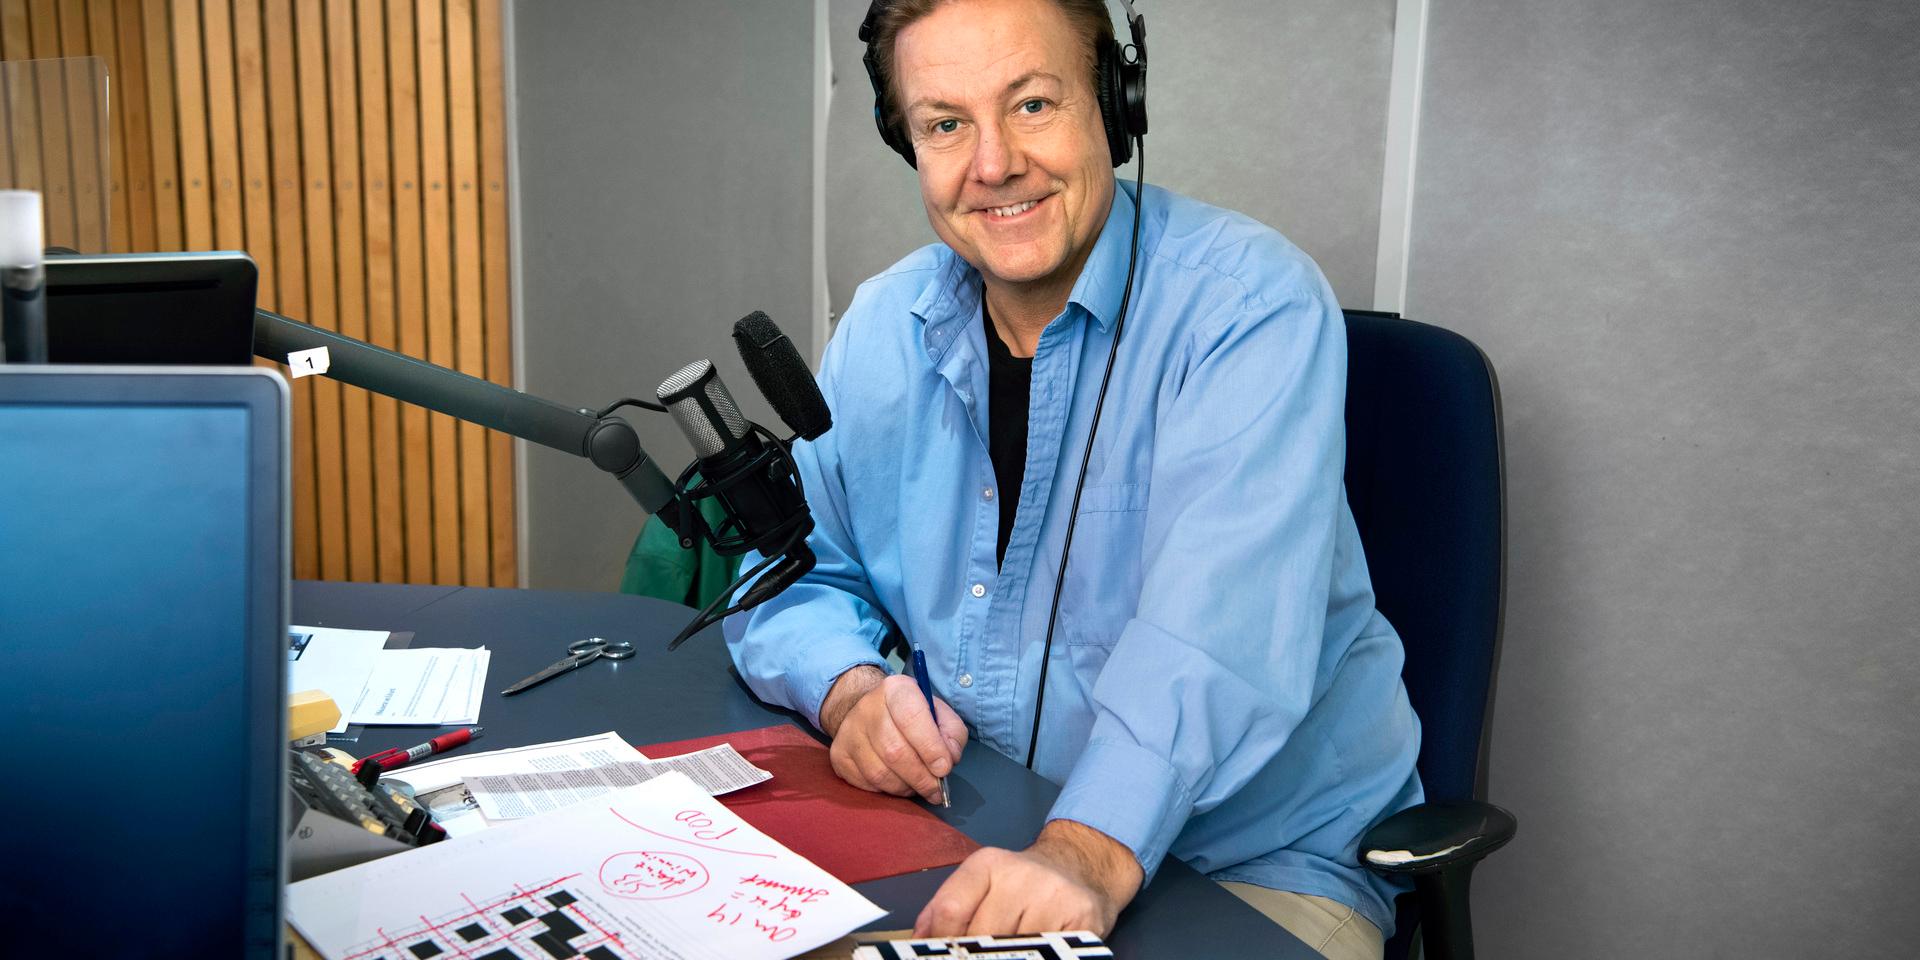 Radioprogramledaren Anders Eldeman har lett Melodikrysset i 26 år.